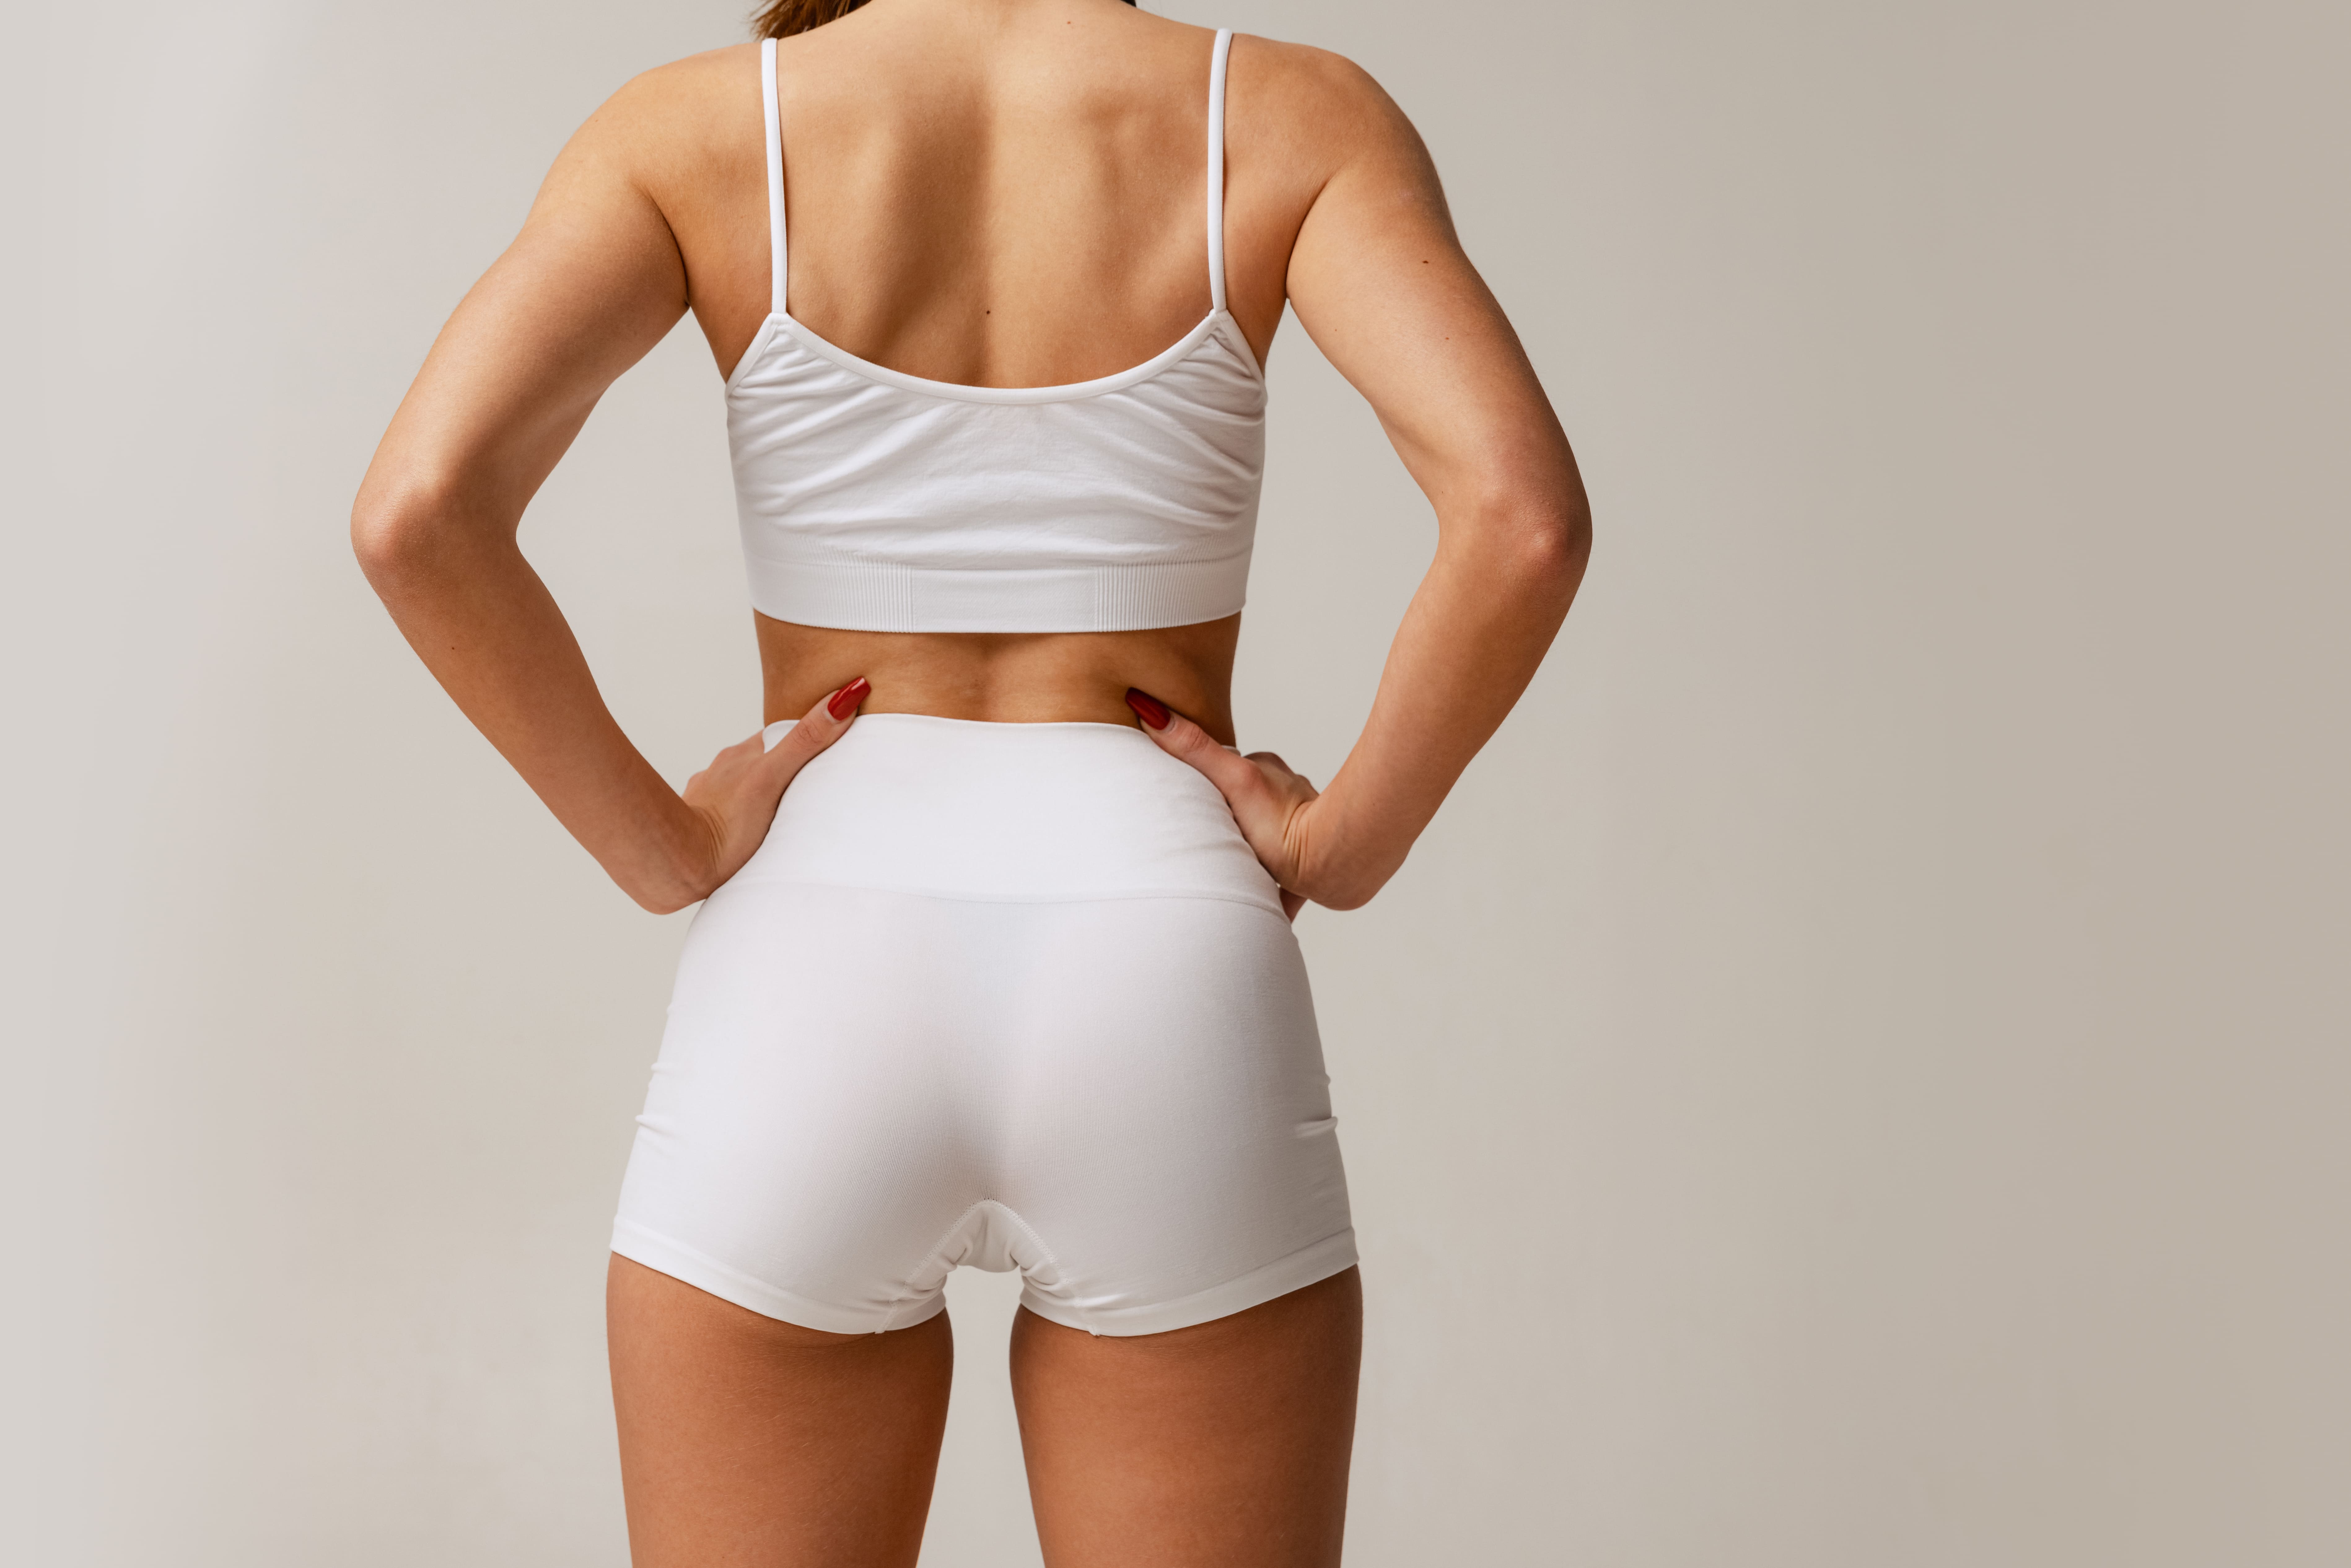 White High-waist Panties And Bra On Sportive Booty. Slim Woman